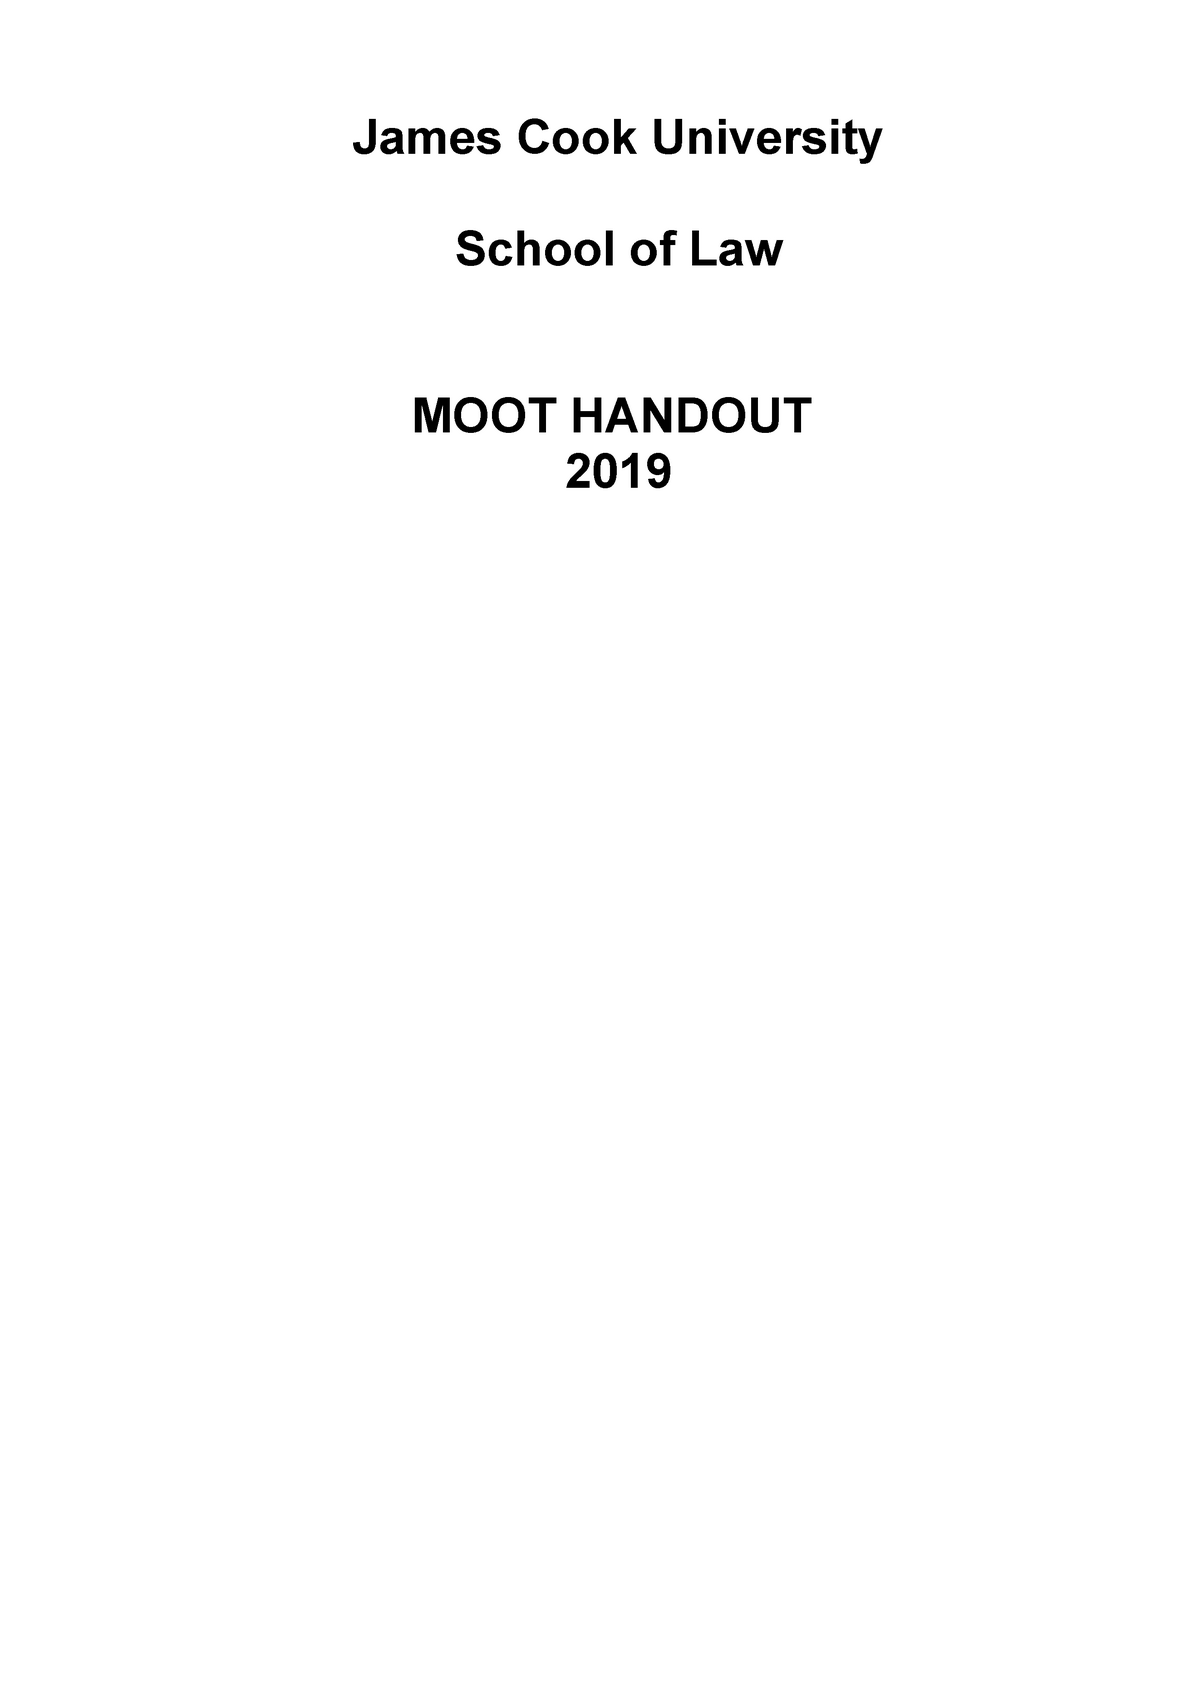 2019 Moot Instructions James Cook University School of Law MOOT